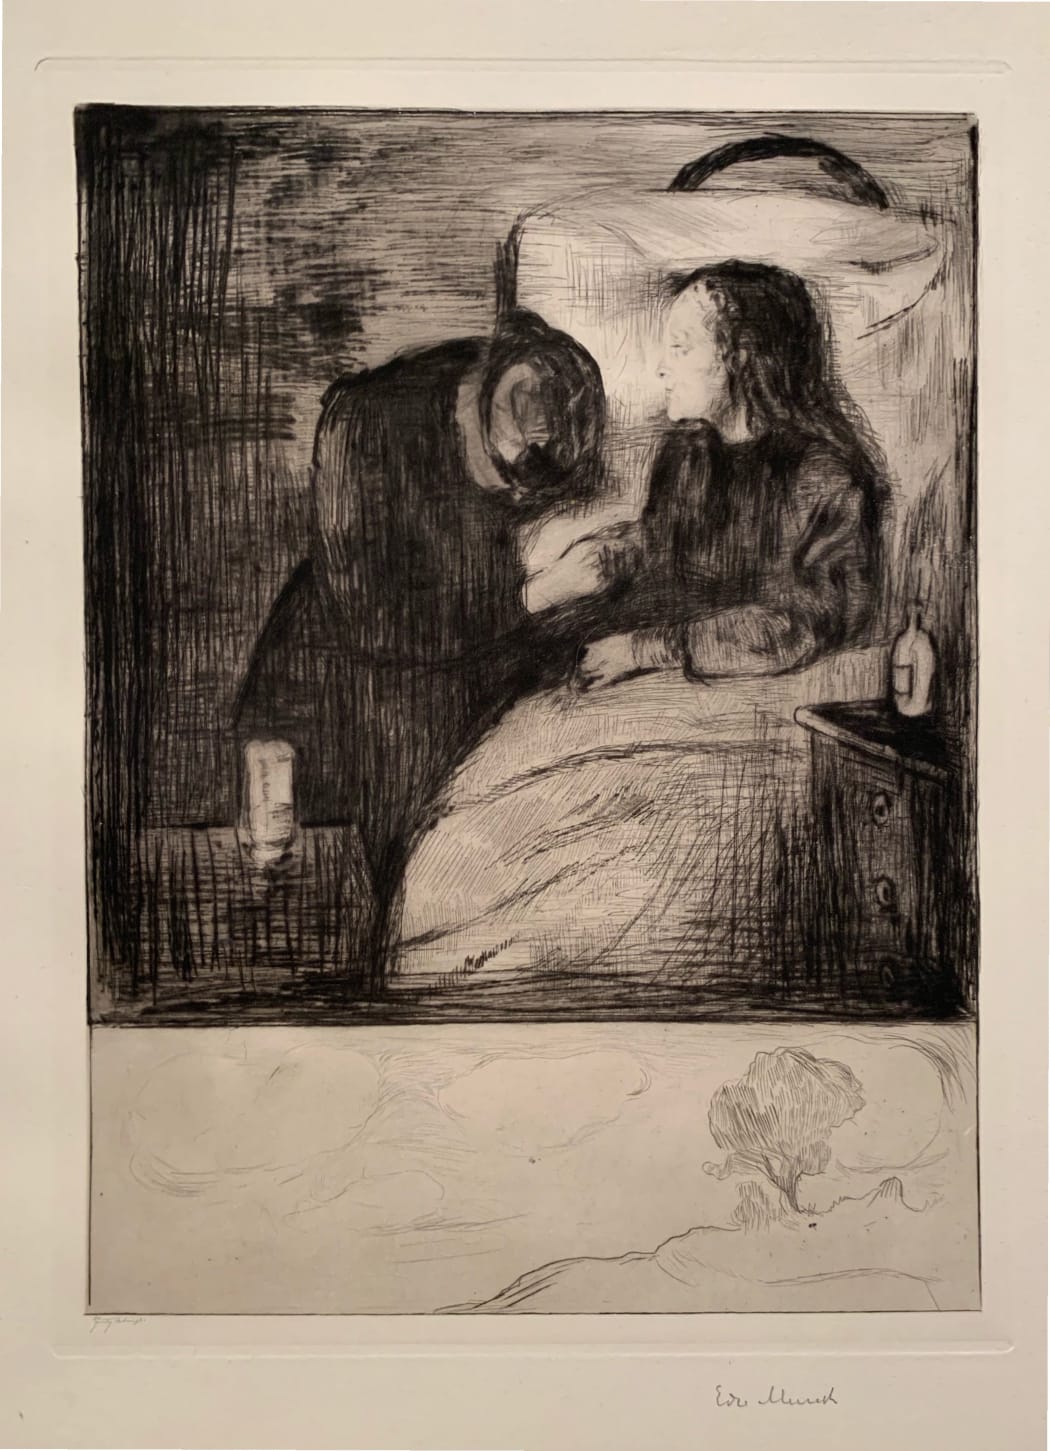 Das Kranke Kind (The Sick Child) (Woll 7), 1894, drypoint, 15 x 11 1/4 inches